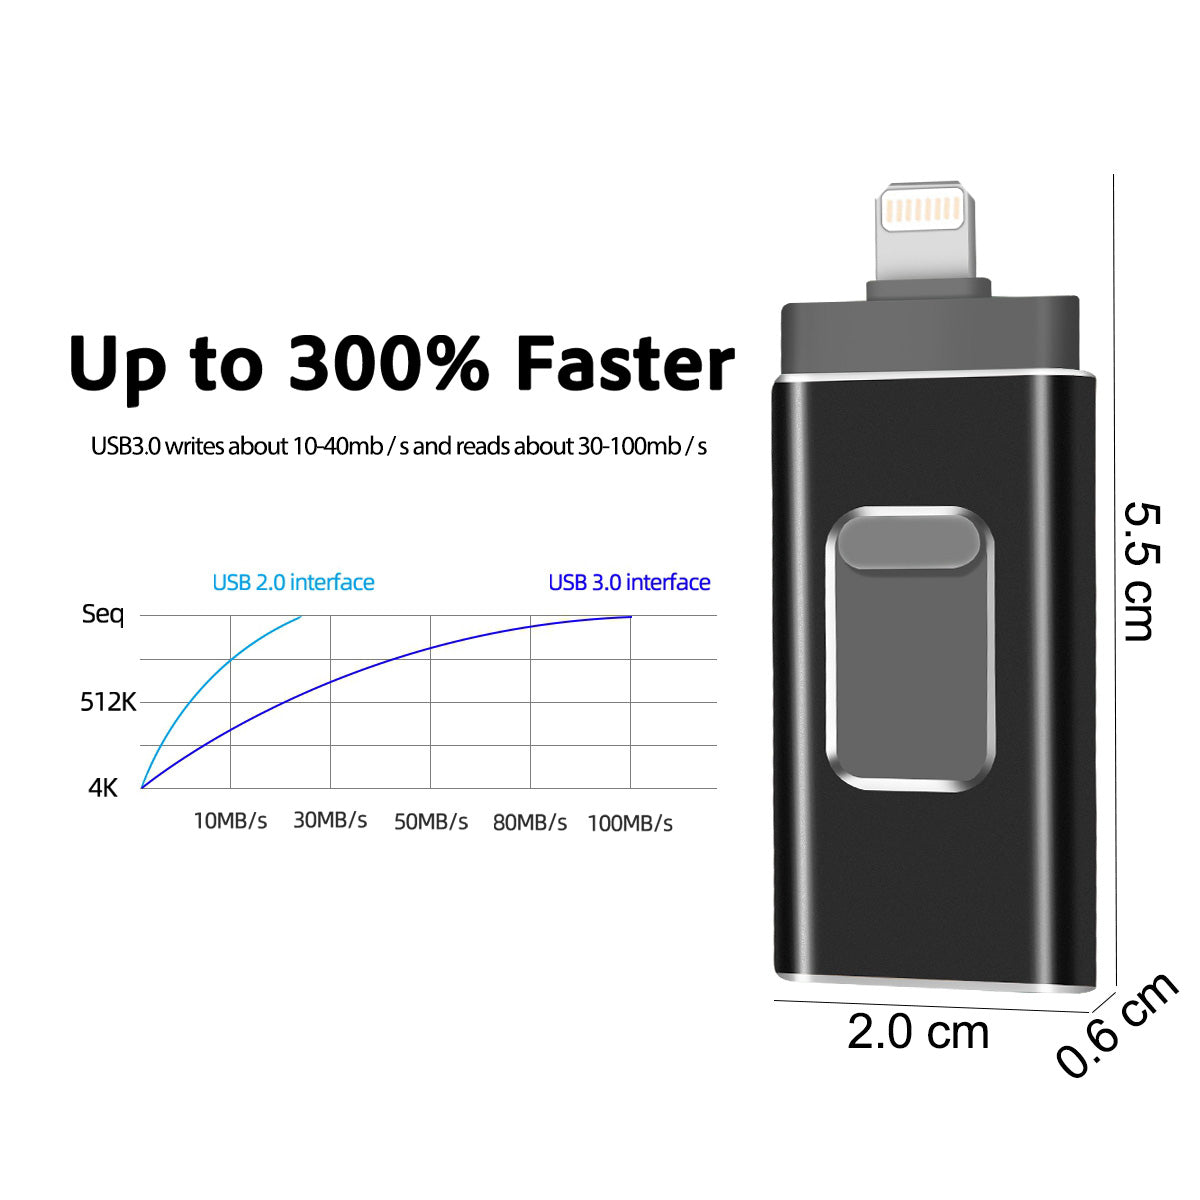 Uniqkart R-01B 64GB Driver Free USB 3.0 Flash Drive USB Memory Stick Thumb Drive Photo Stick for iPhone Android PC - Black